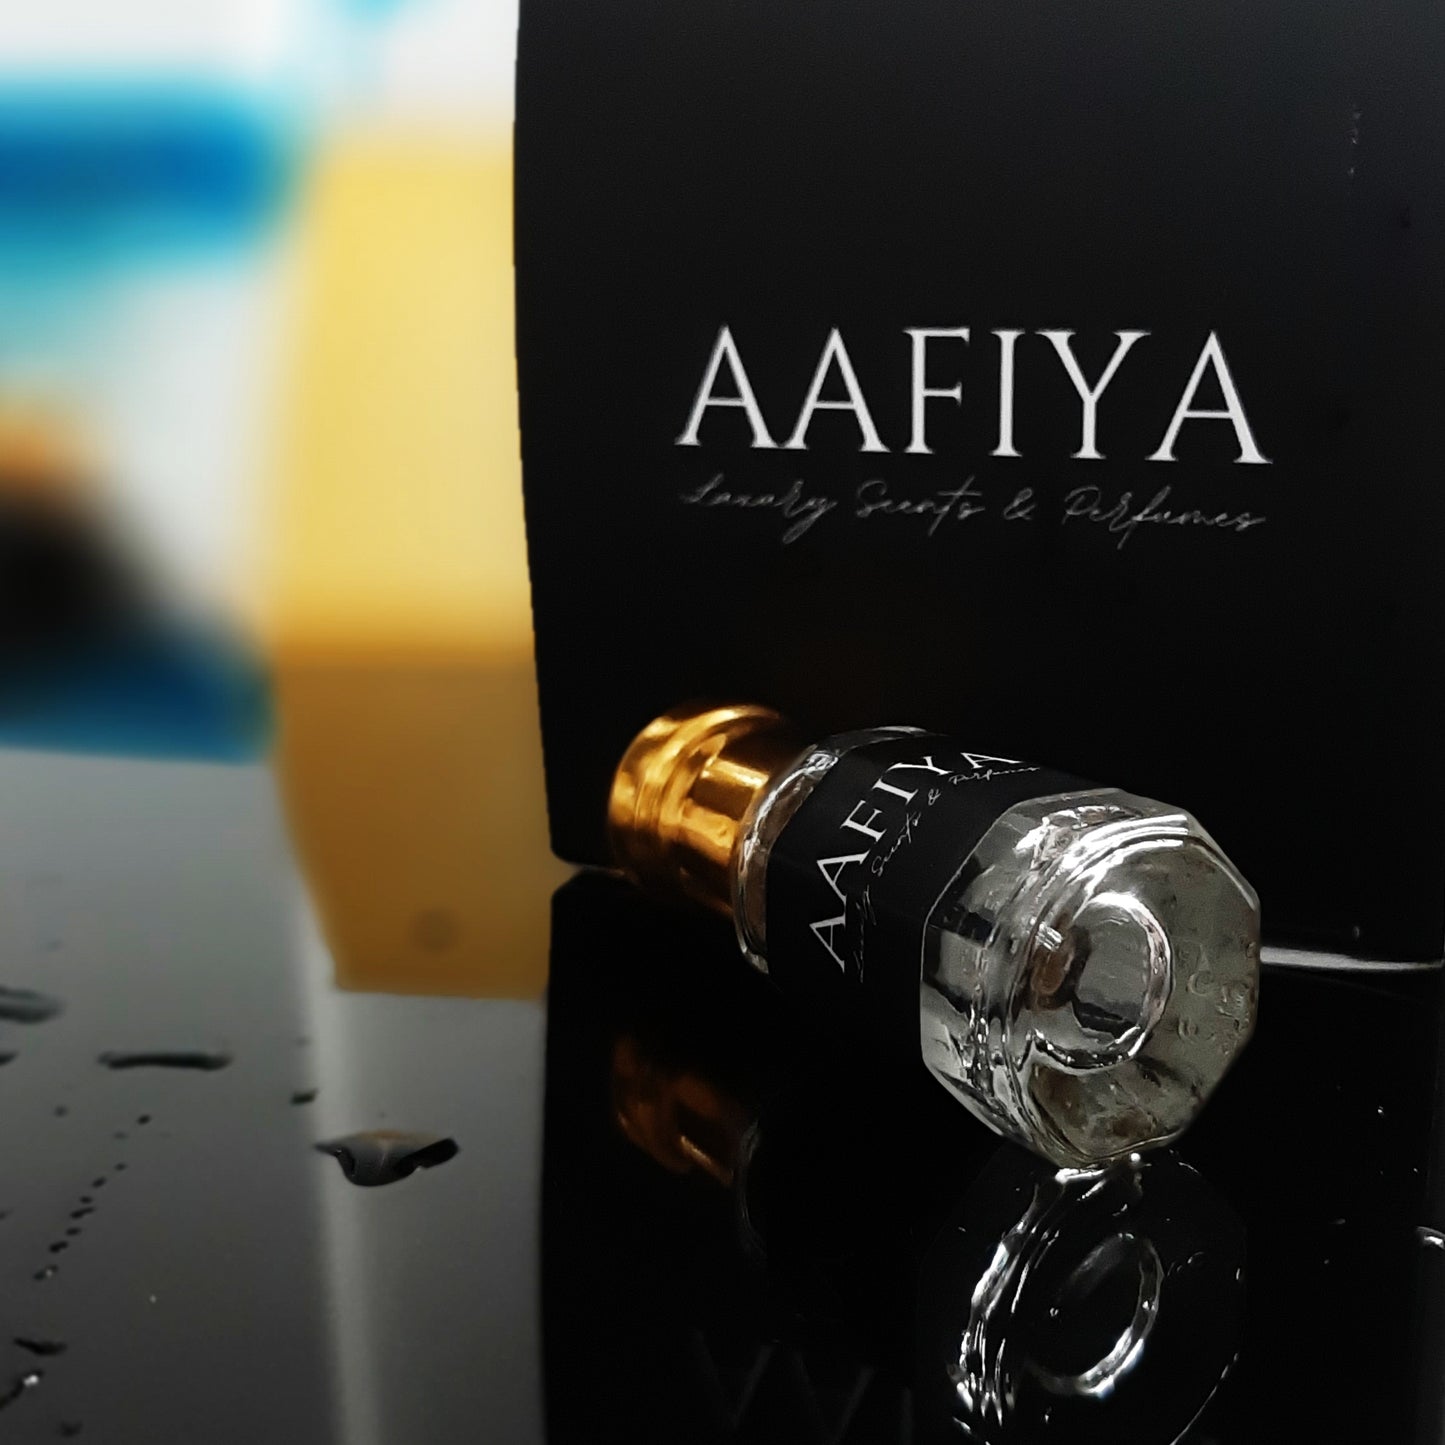 Mojave Ghost - Aafiya Luxury Scents & Perfumes